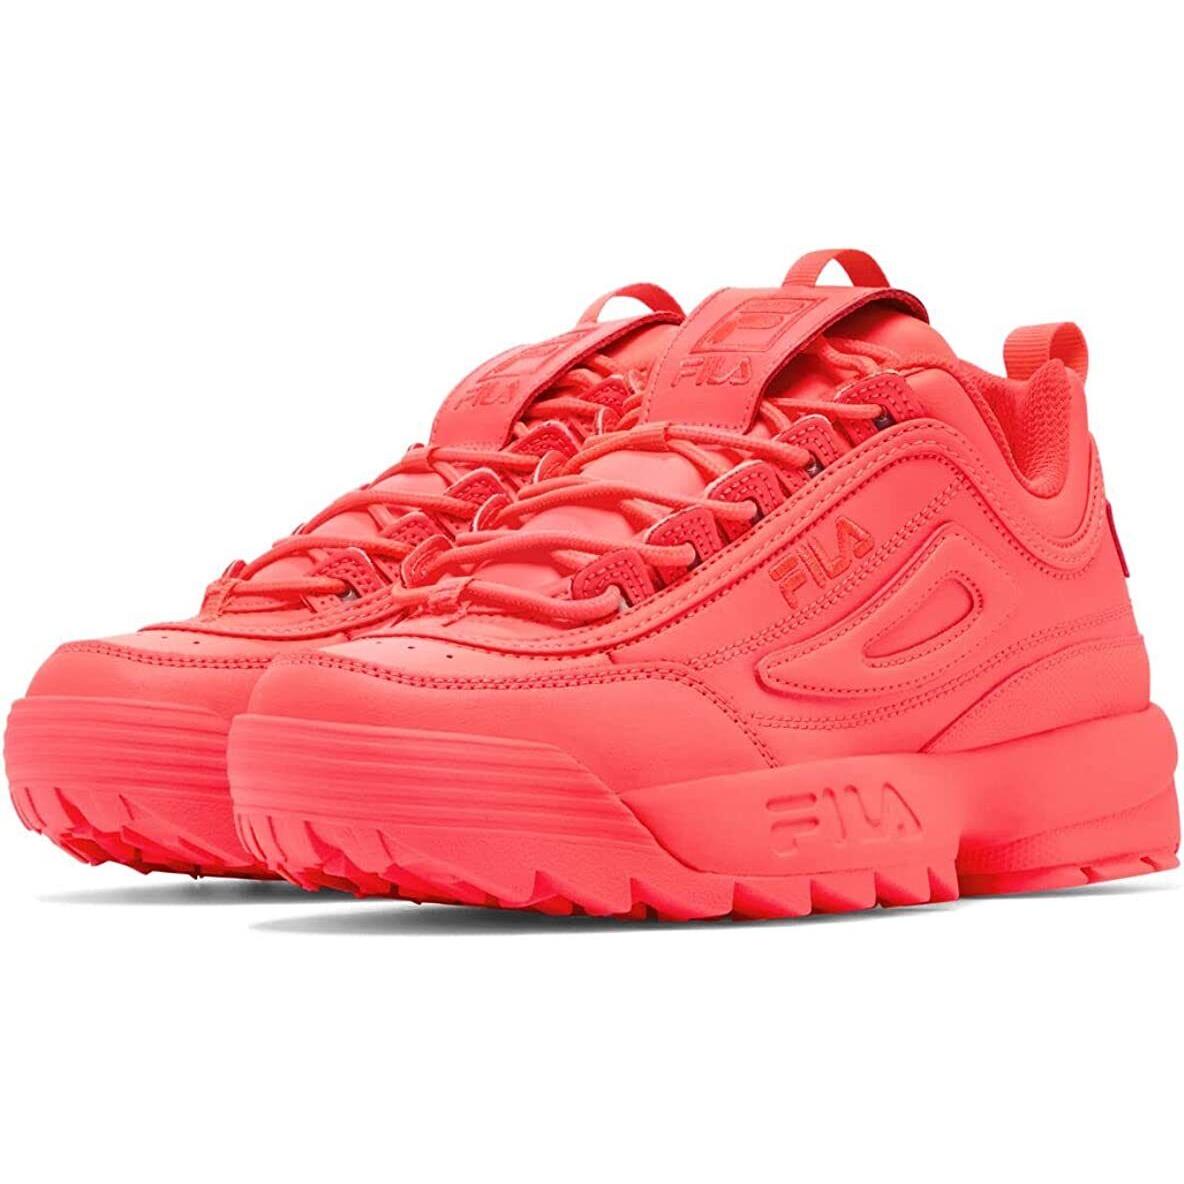 Women Fila Disruptor Premium II Sneaker Shoe 5XM01763-601 Coral/fiery Coral